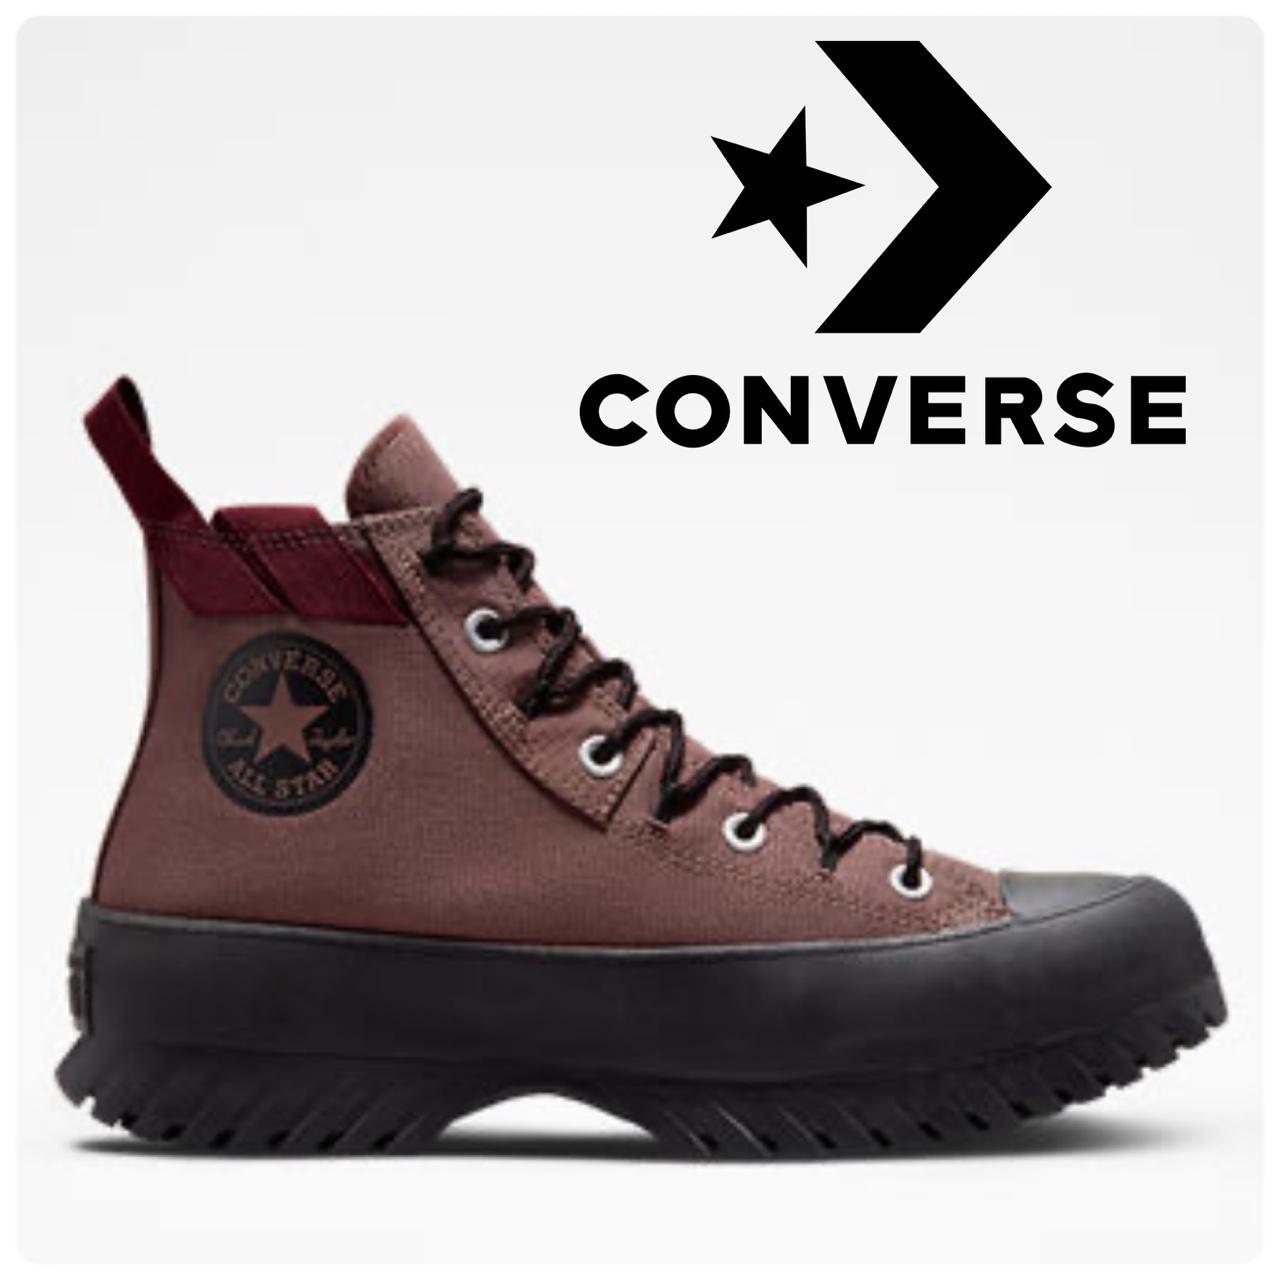 Converse Women's Burgundy and Black Boots | Depop